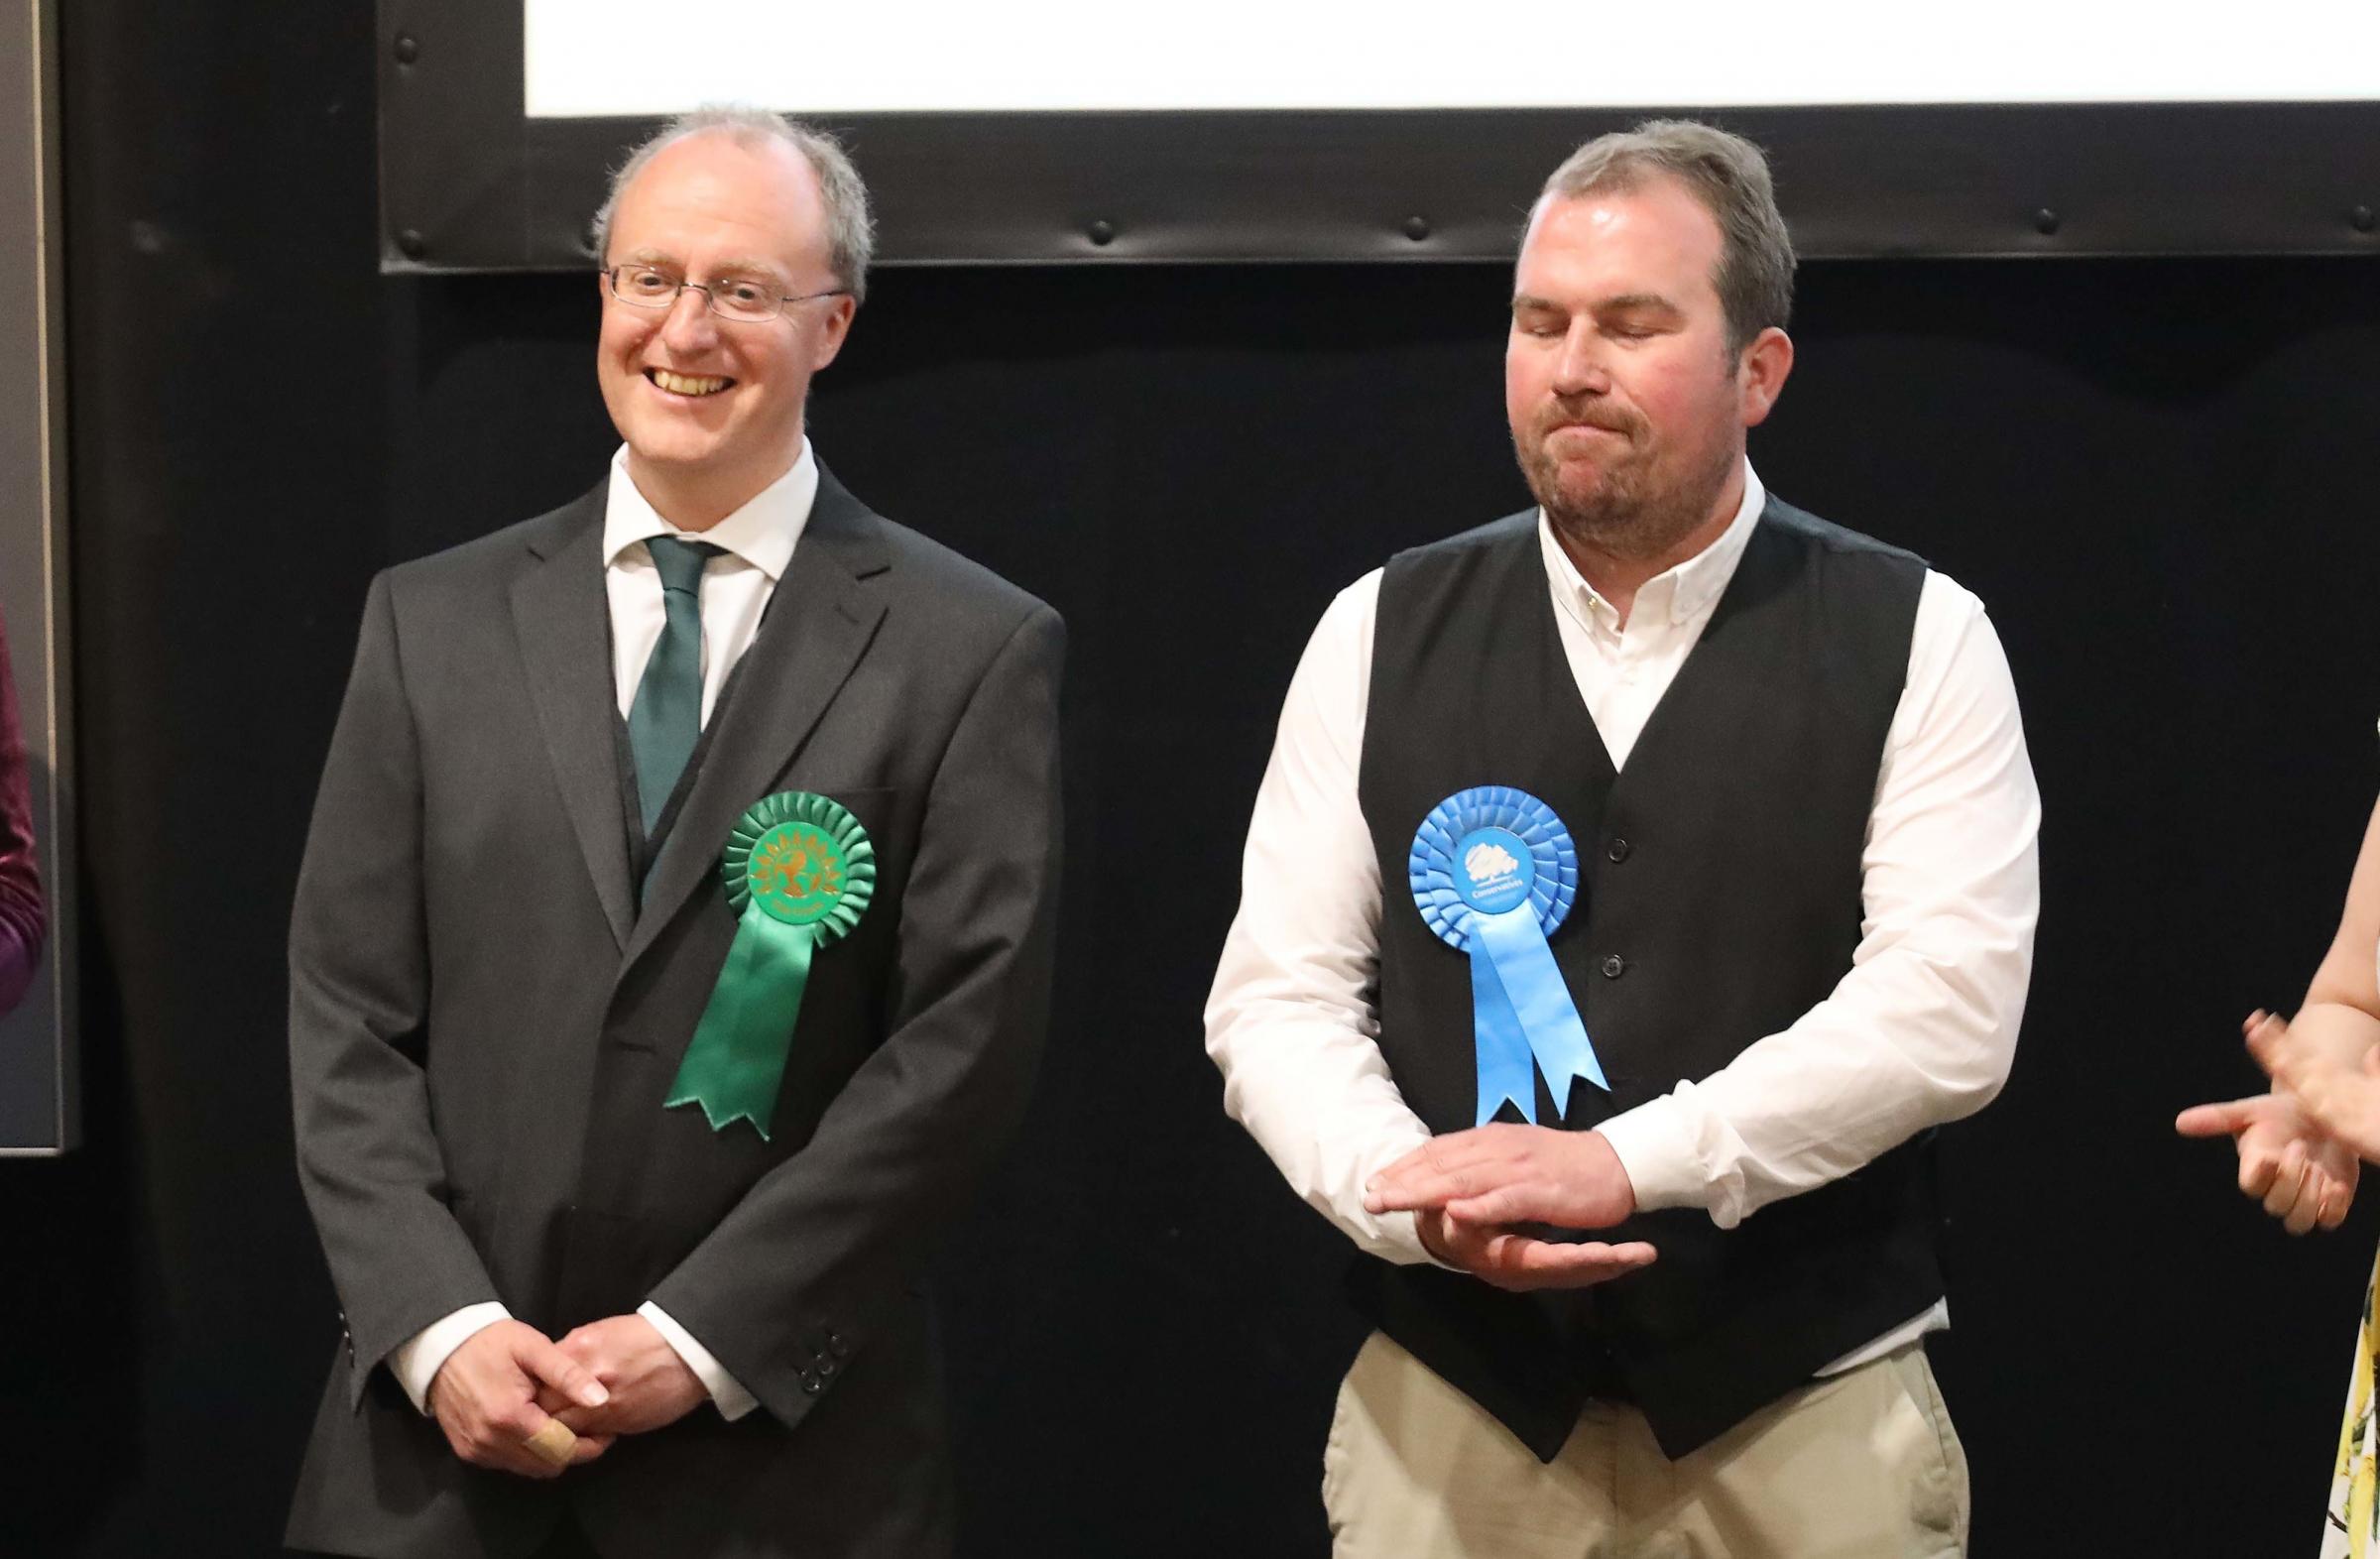 Returning - Mark Goacher of the Greens beat Darius Laws in 2019